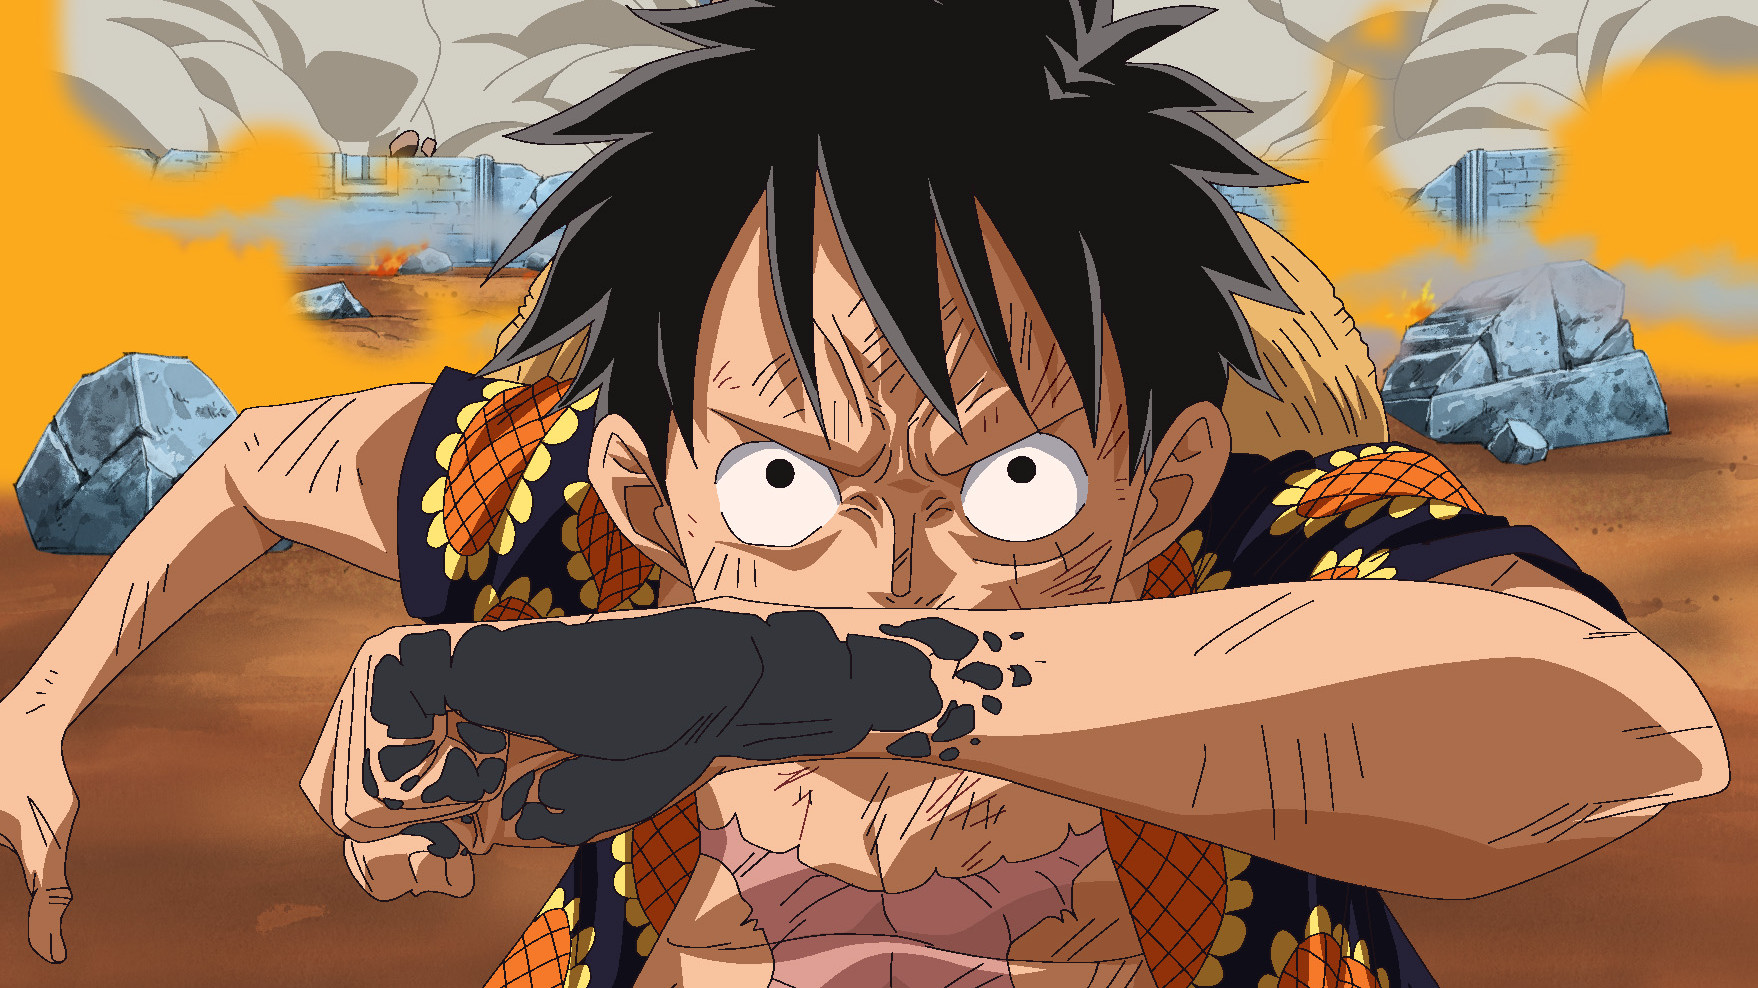 Nonton Streaming One Piece Subtitle Indonesia Full Episode Anoboy 480p